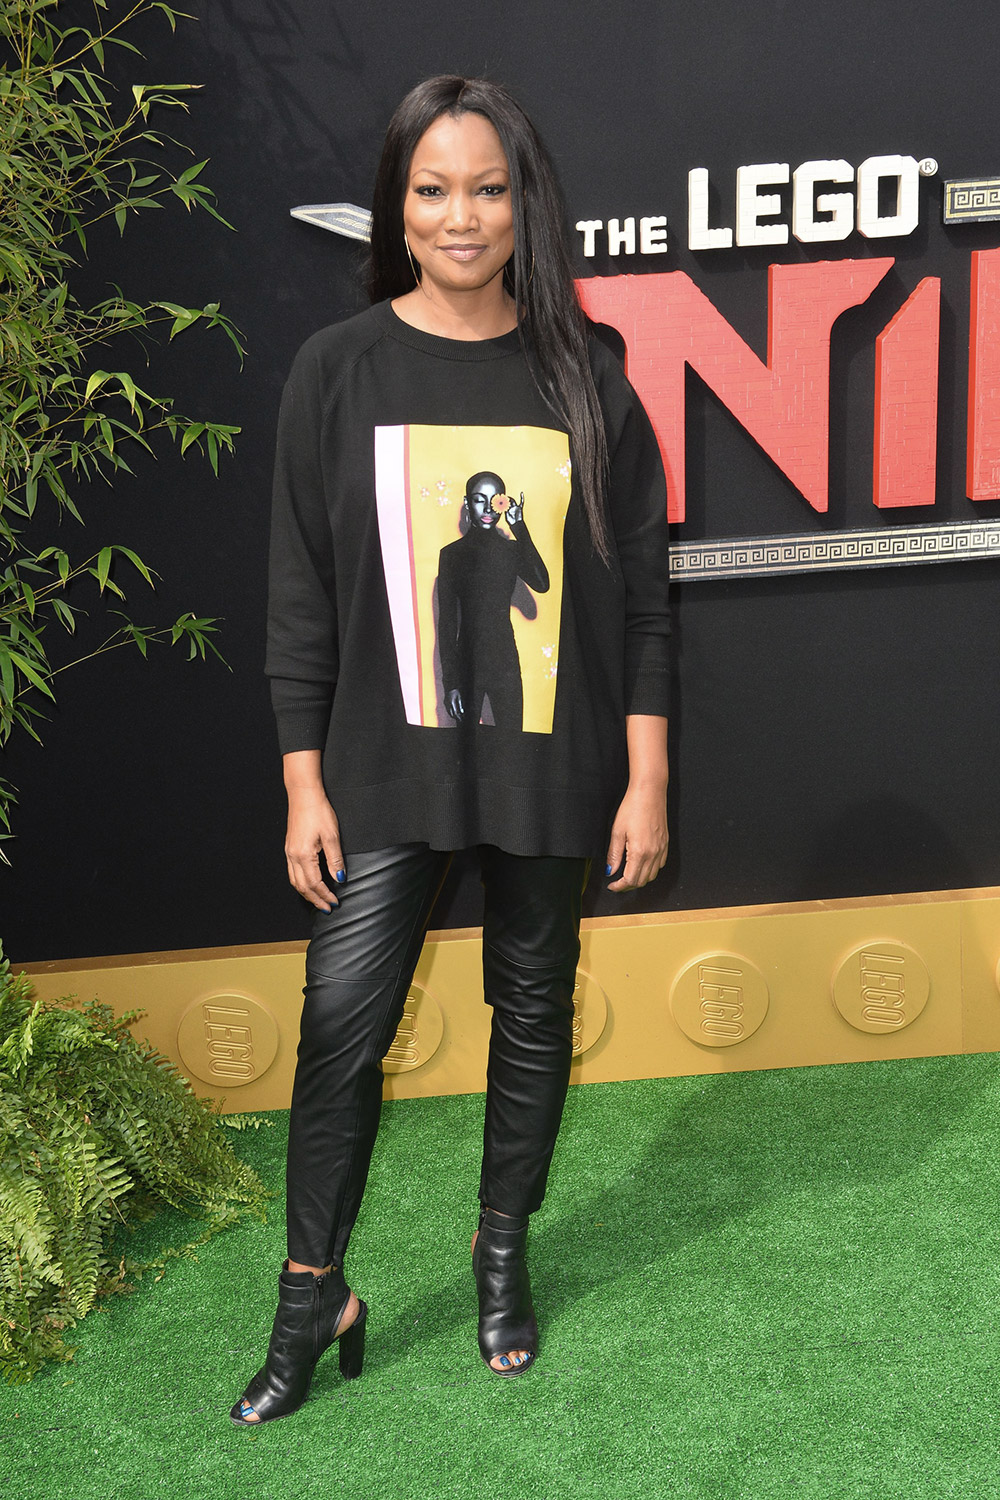 Garcelle Beauvais-Nilon attends The Lego Ninjago Movie premiere